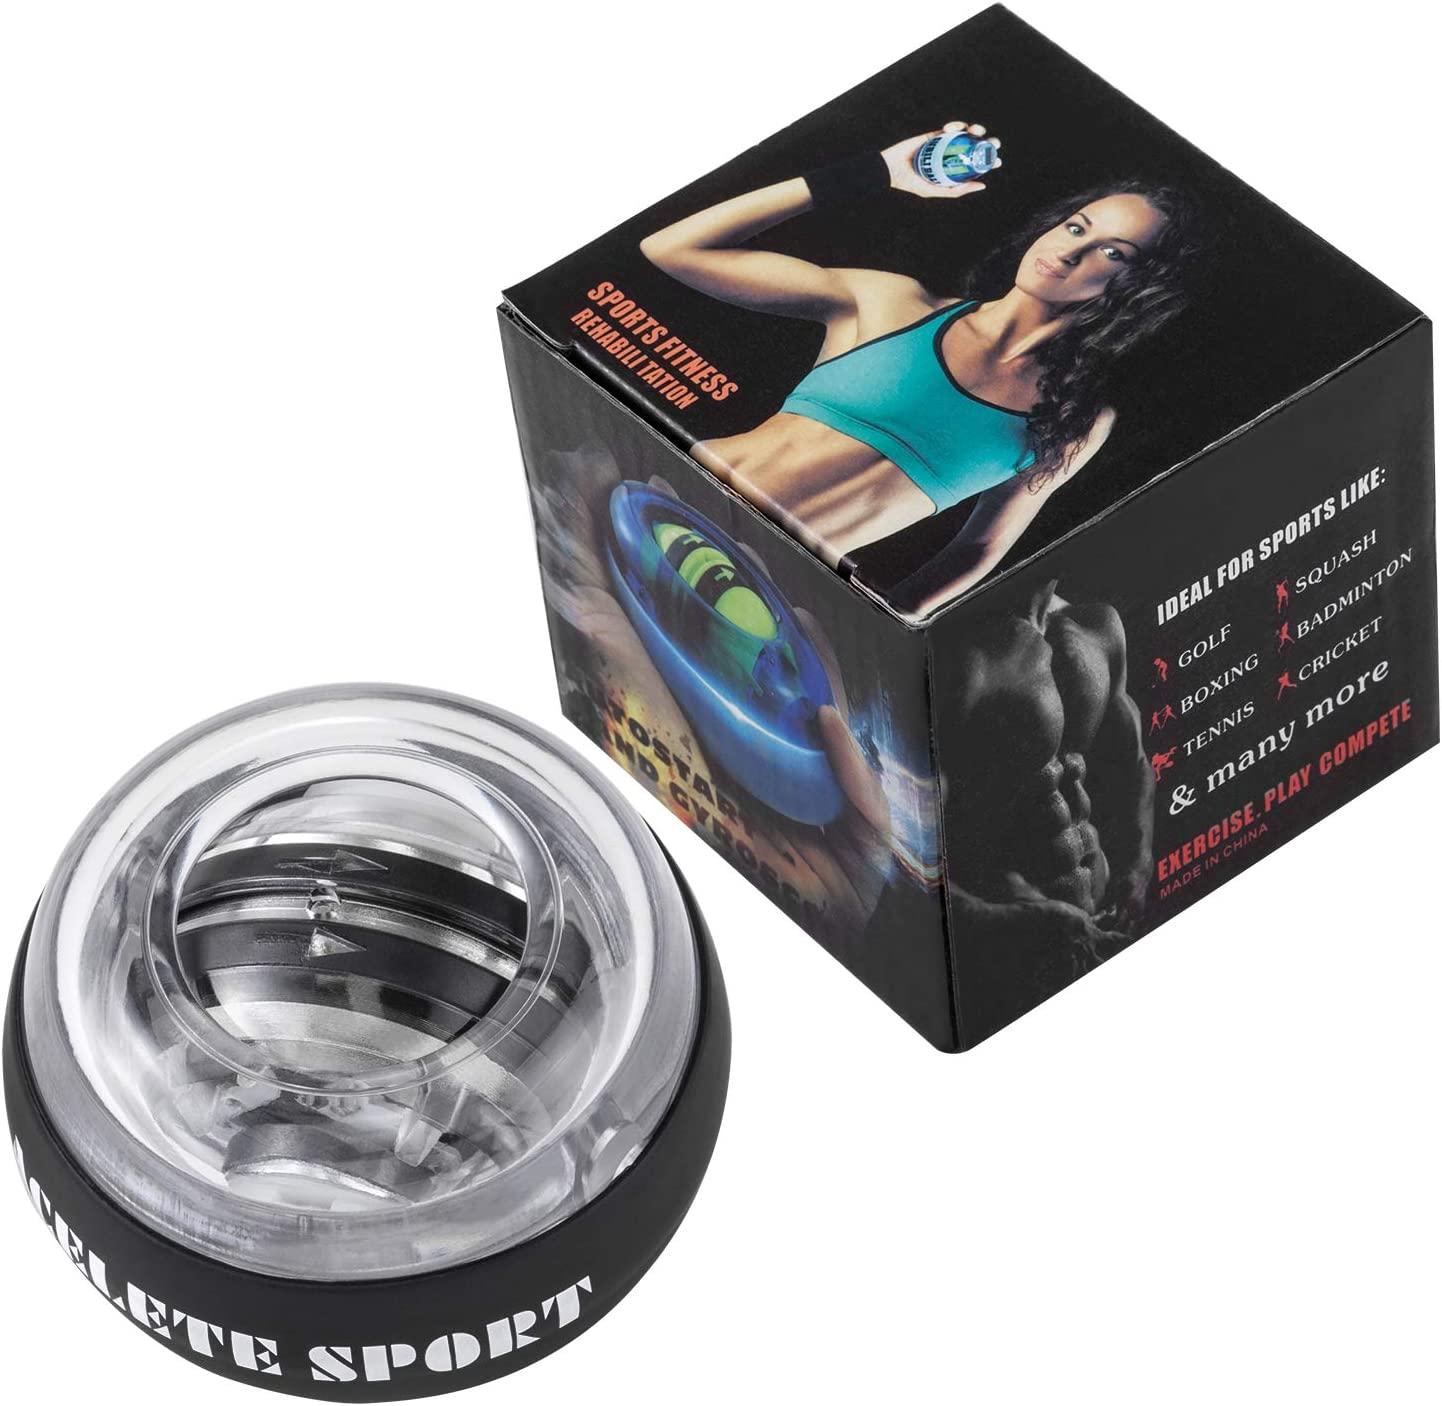 Auto Start Wrist Powwer Gyroscopic Ball Forearm Exerciser Black Gyro Ball -  China Handgrips and Grip Trainer price